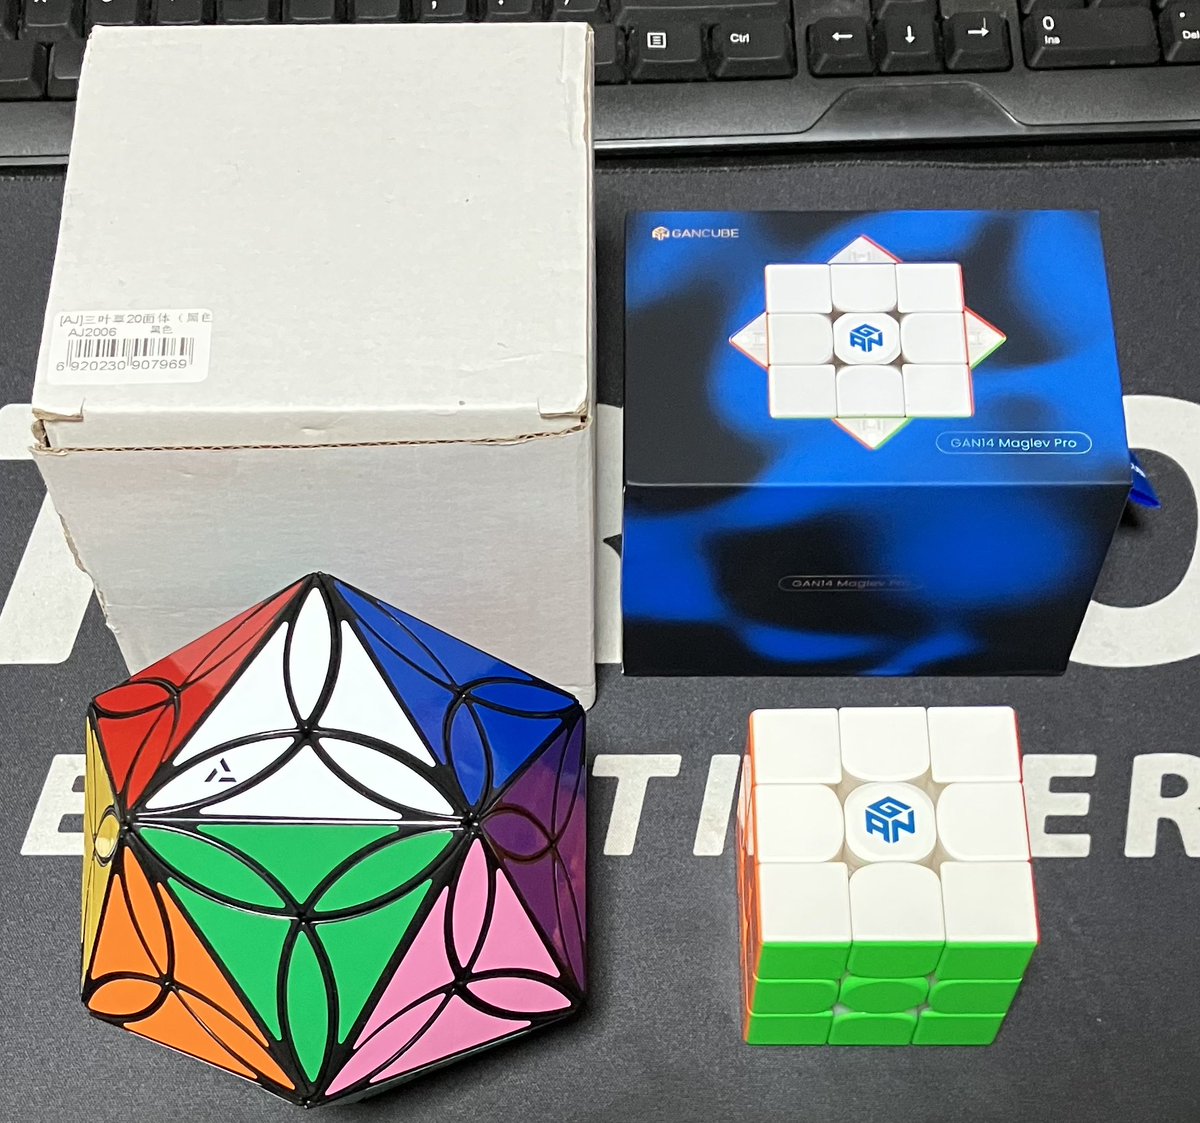 GAN14 MagLev Pro Stickerless UV-CoatedとAJ Clover Icosahedron 20 Colors届いた！
#ルービックキューブ #tribox